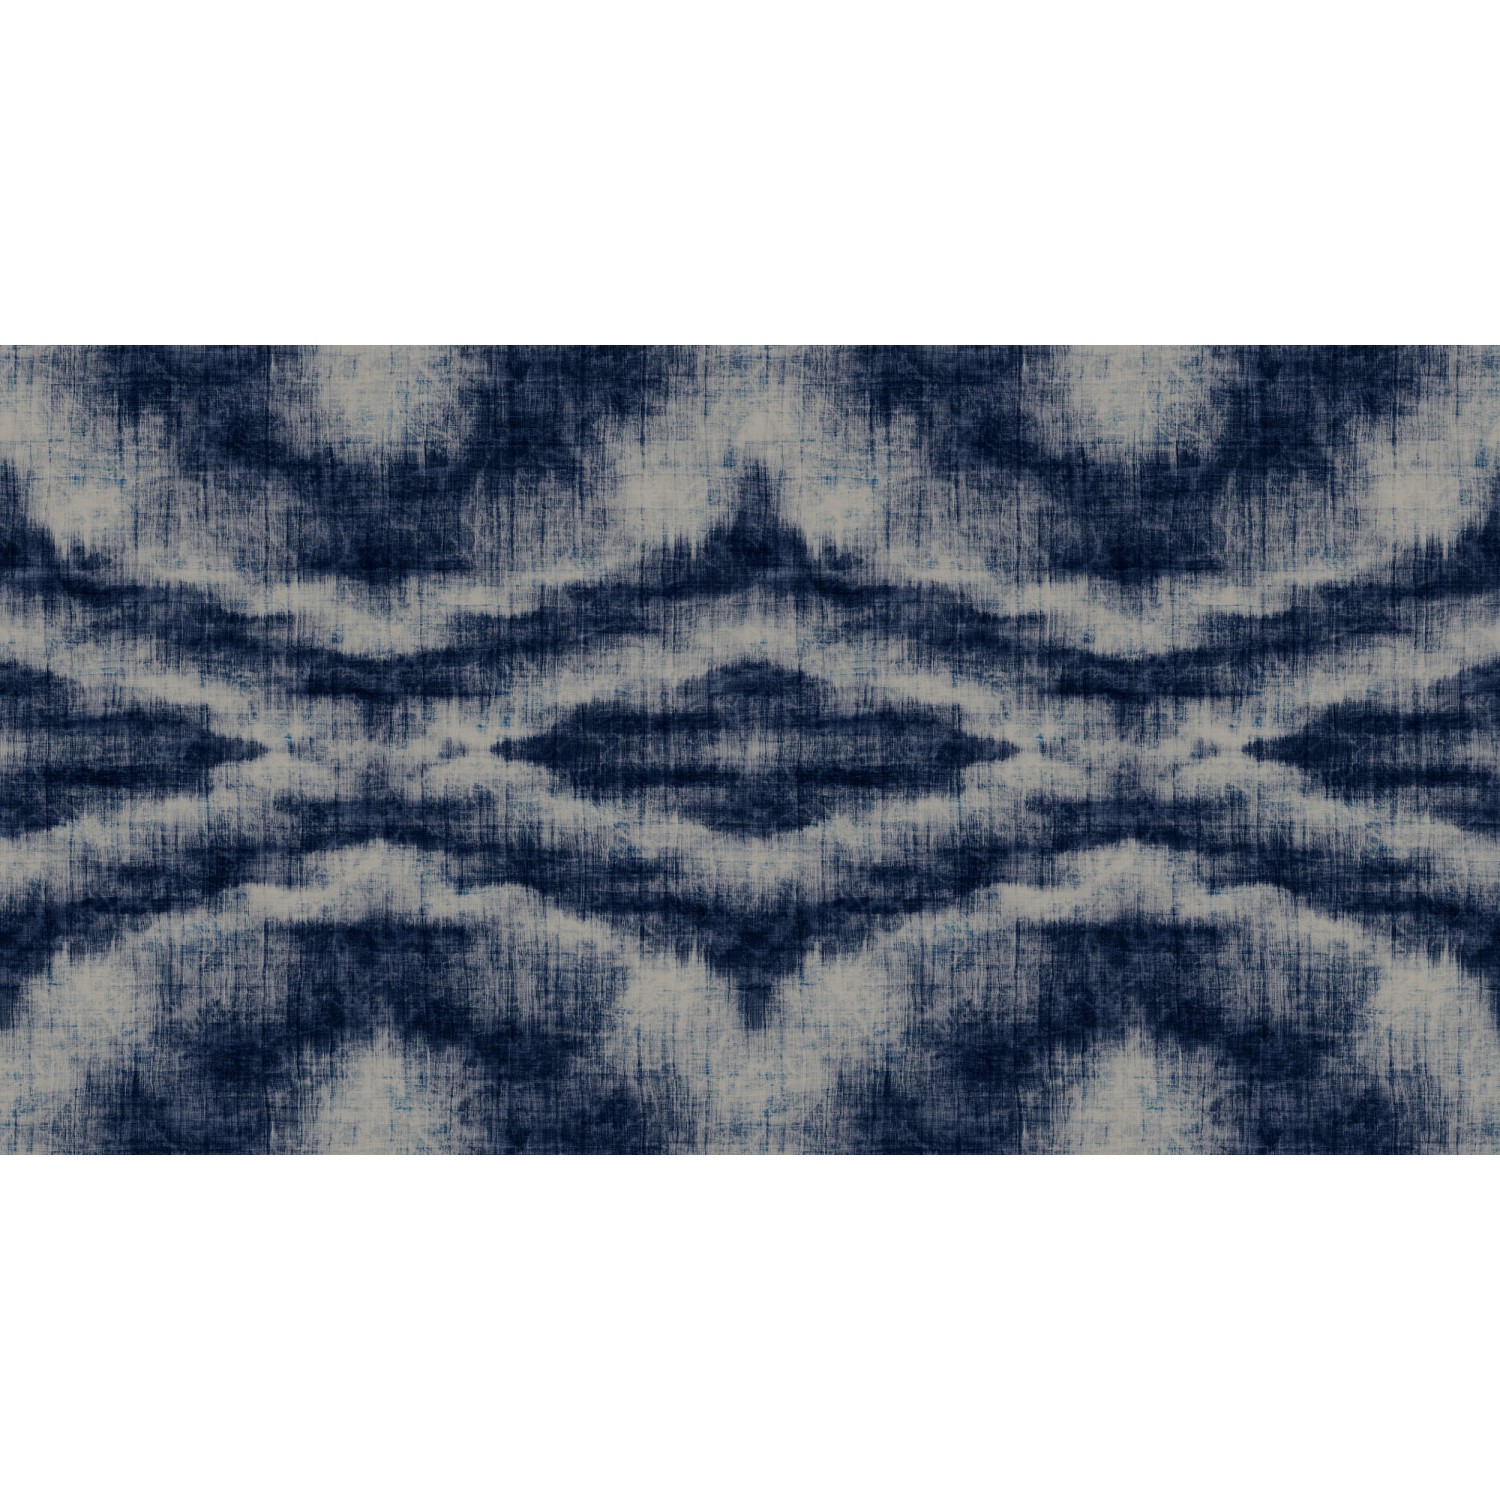 Fototapete Grafik Muster Abstrakt Indigo Blau Grau 5,00 m x 2,70 m FSC® von -